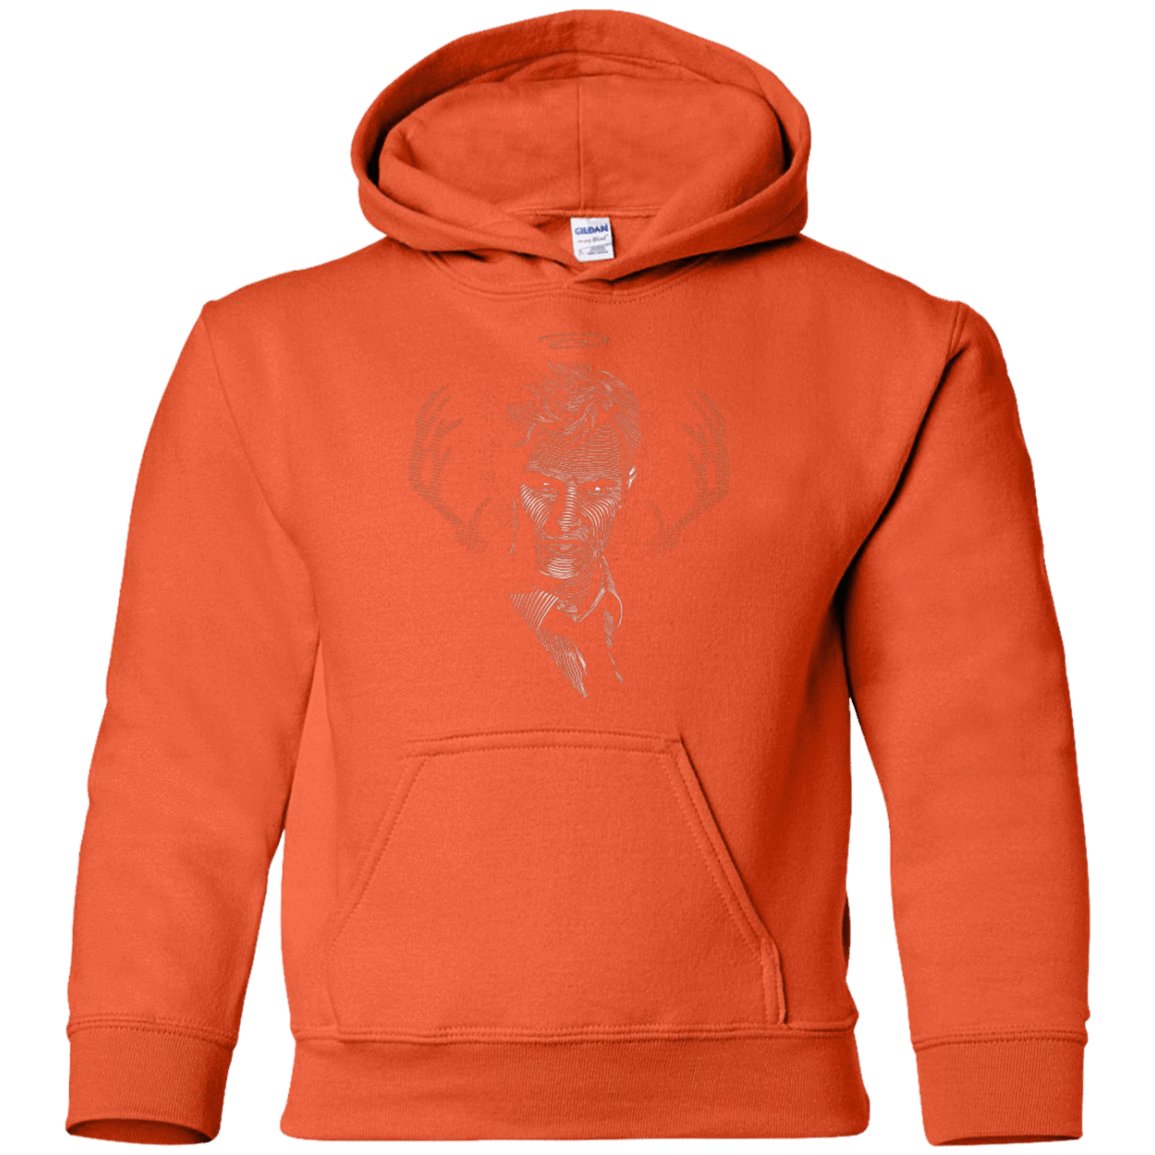 Sweatshirts Orange / YS The Detective Youth Hoodie